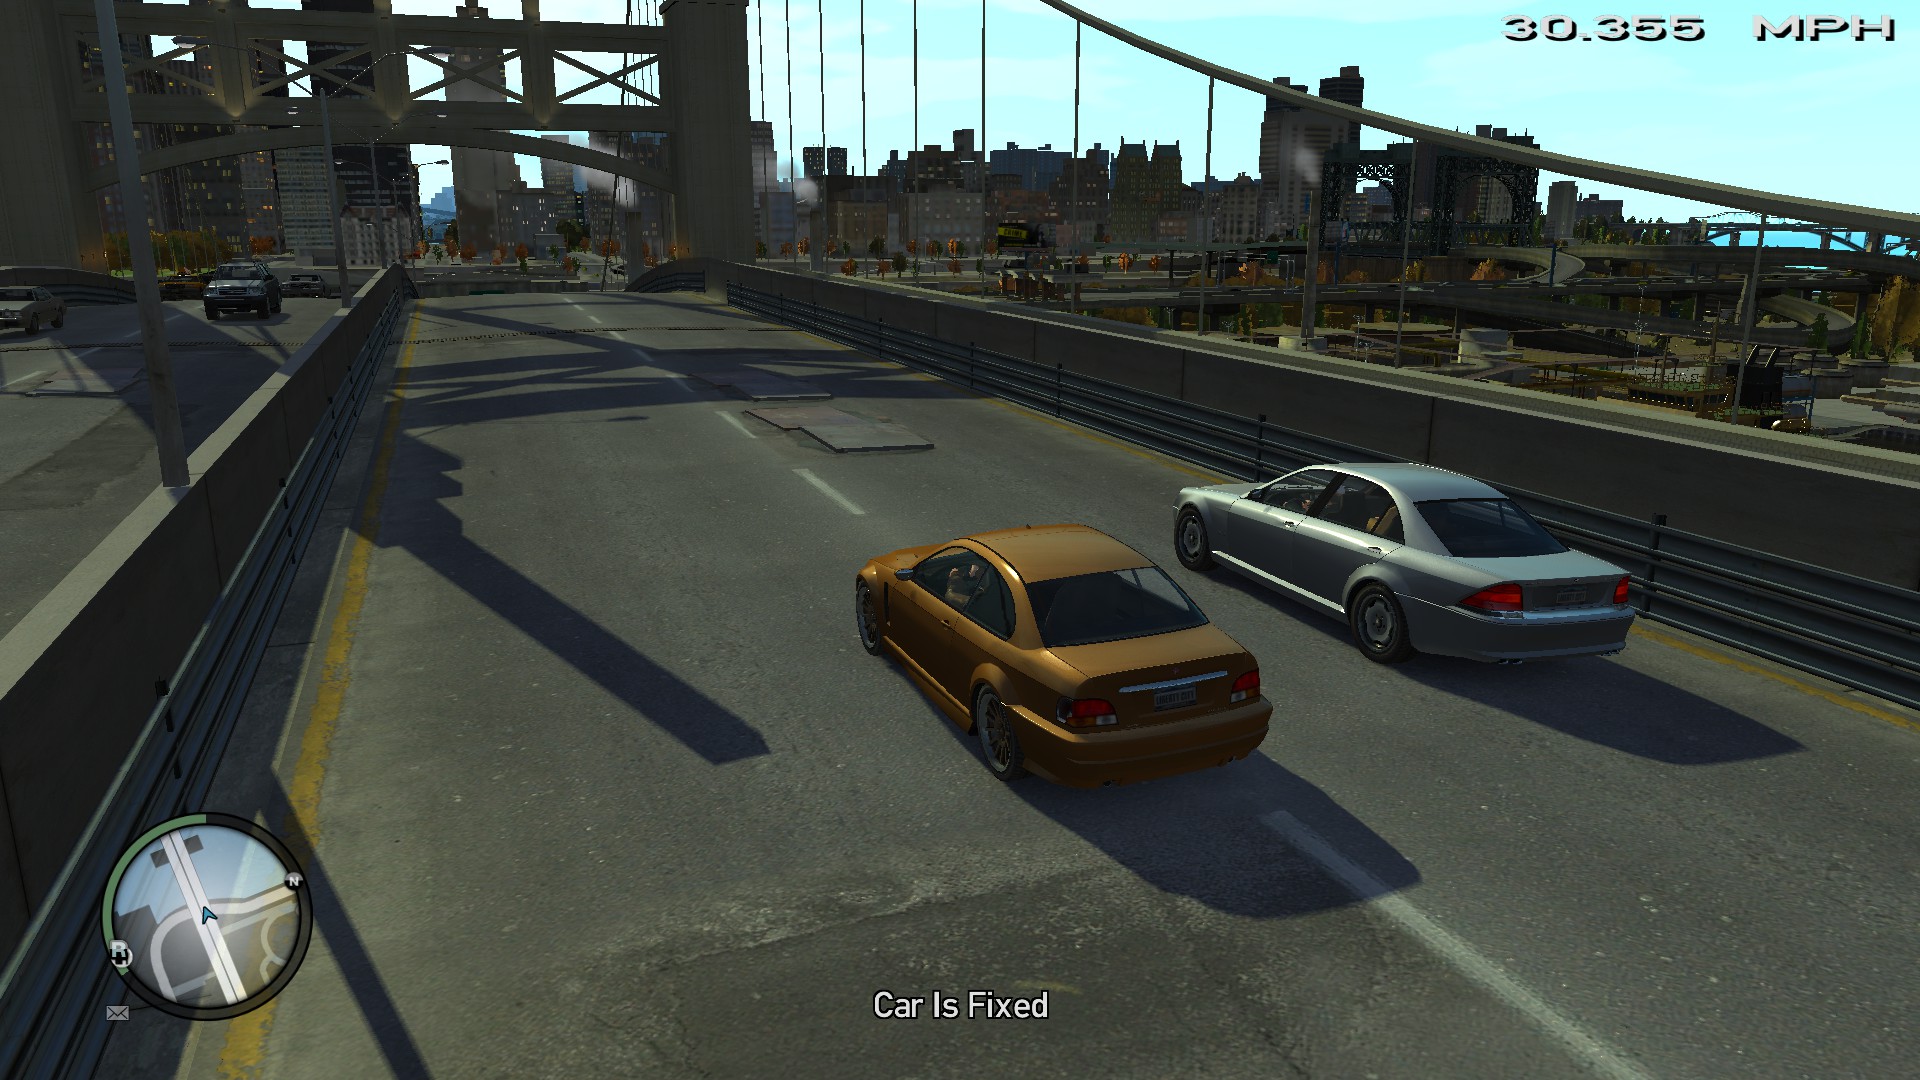 My car игра на пк. Grand Theft auto 4 graphic Mod. Grand Theft auto 4 Fix Mods. ГТА 3 реалистичная Графика. ГТА 4 Графика мод.